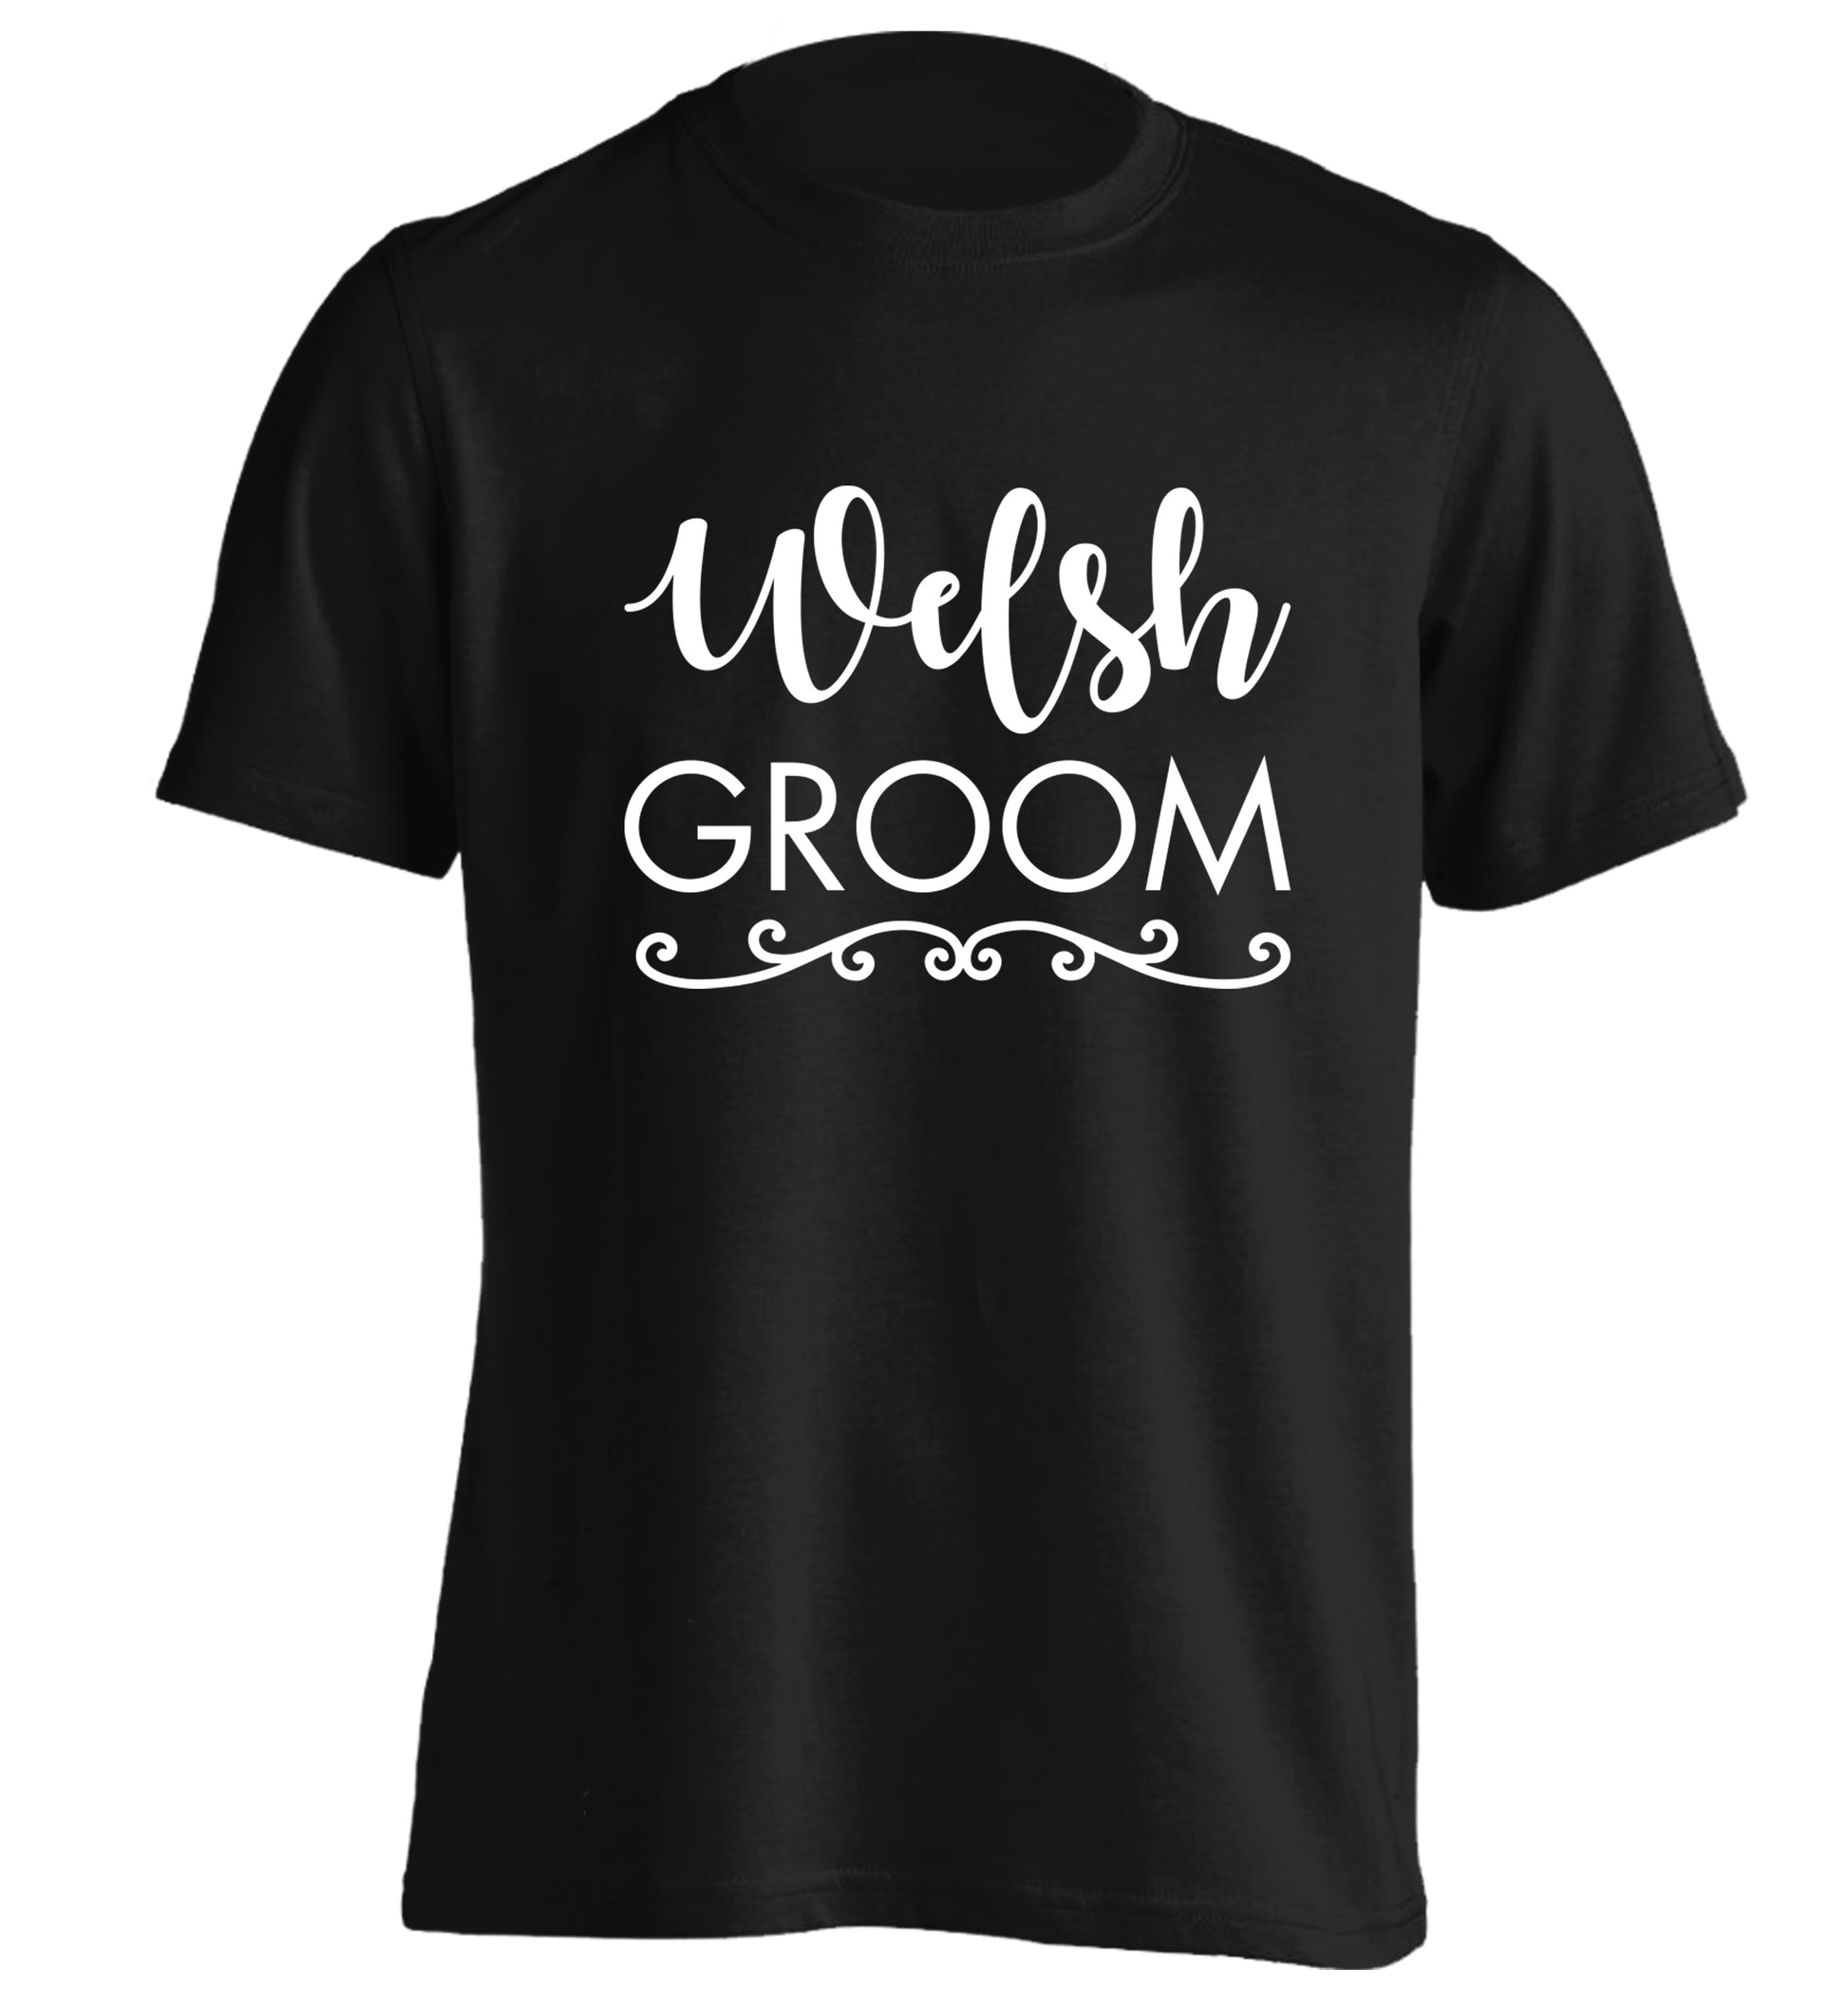 Welsh groom adults unisex black Tshirt 2XL